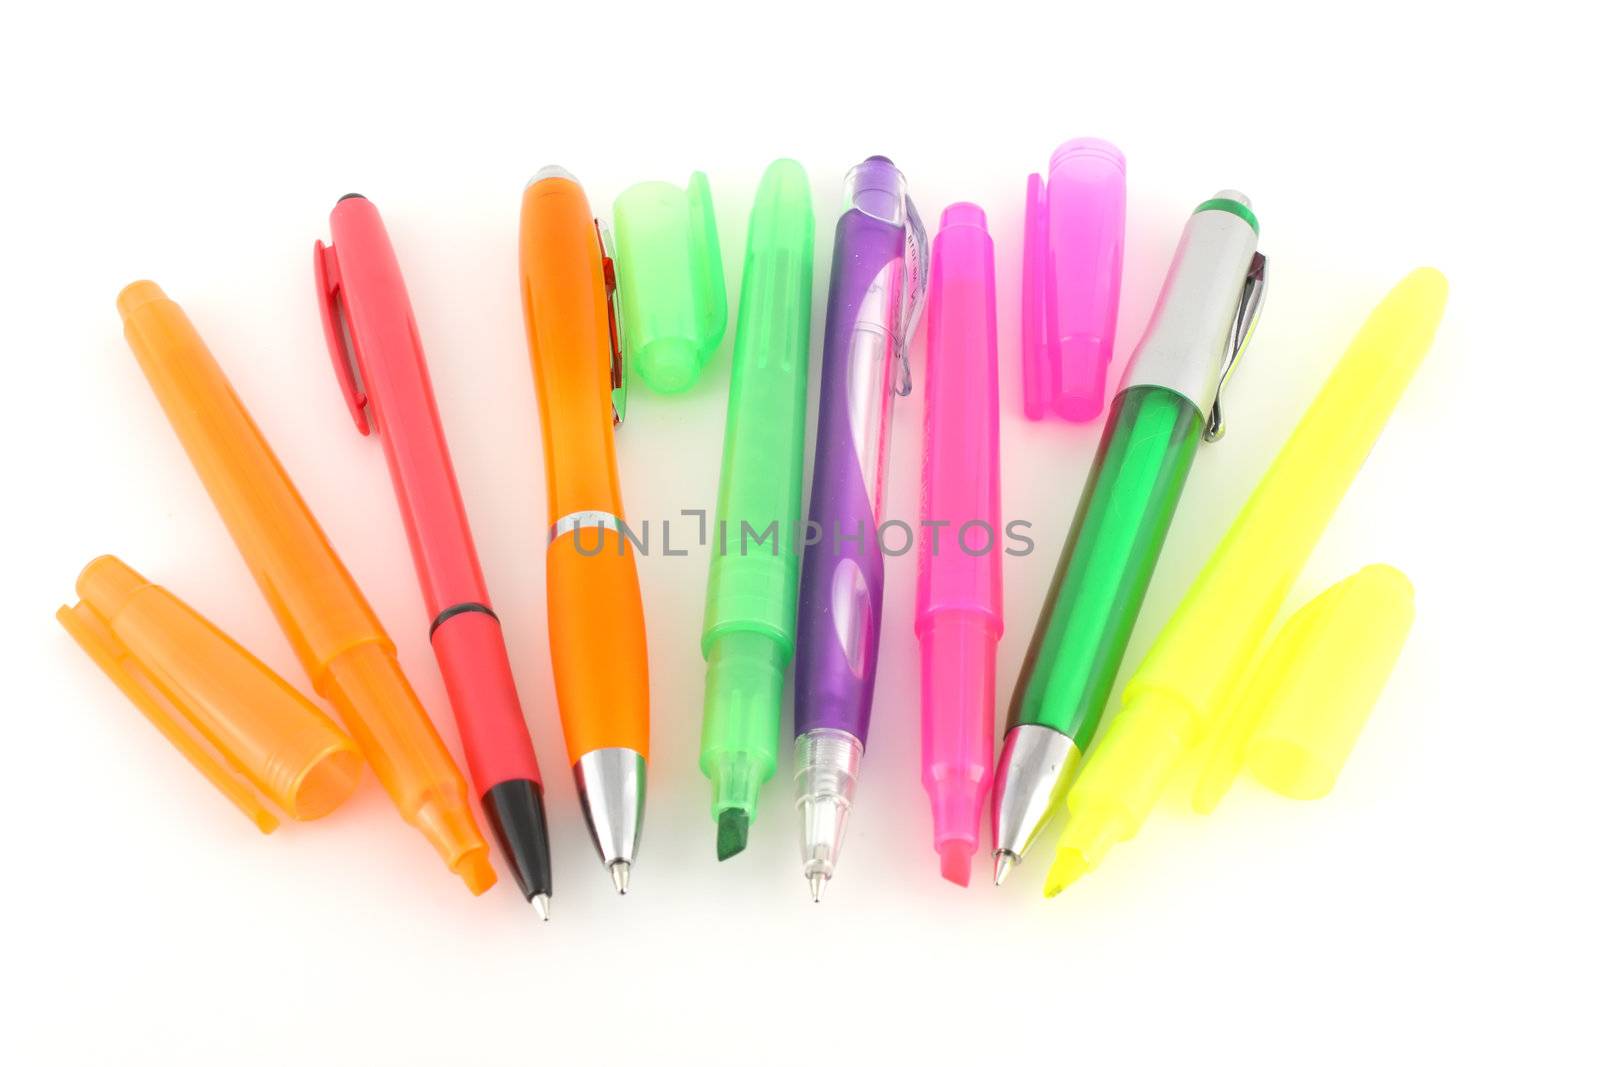 Color pens and felt-tip pens by sergpet